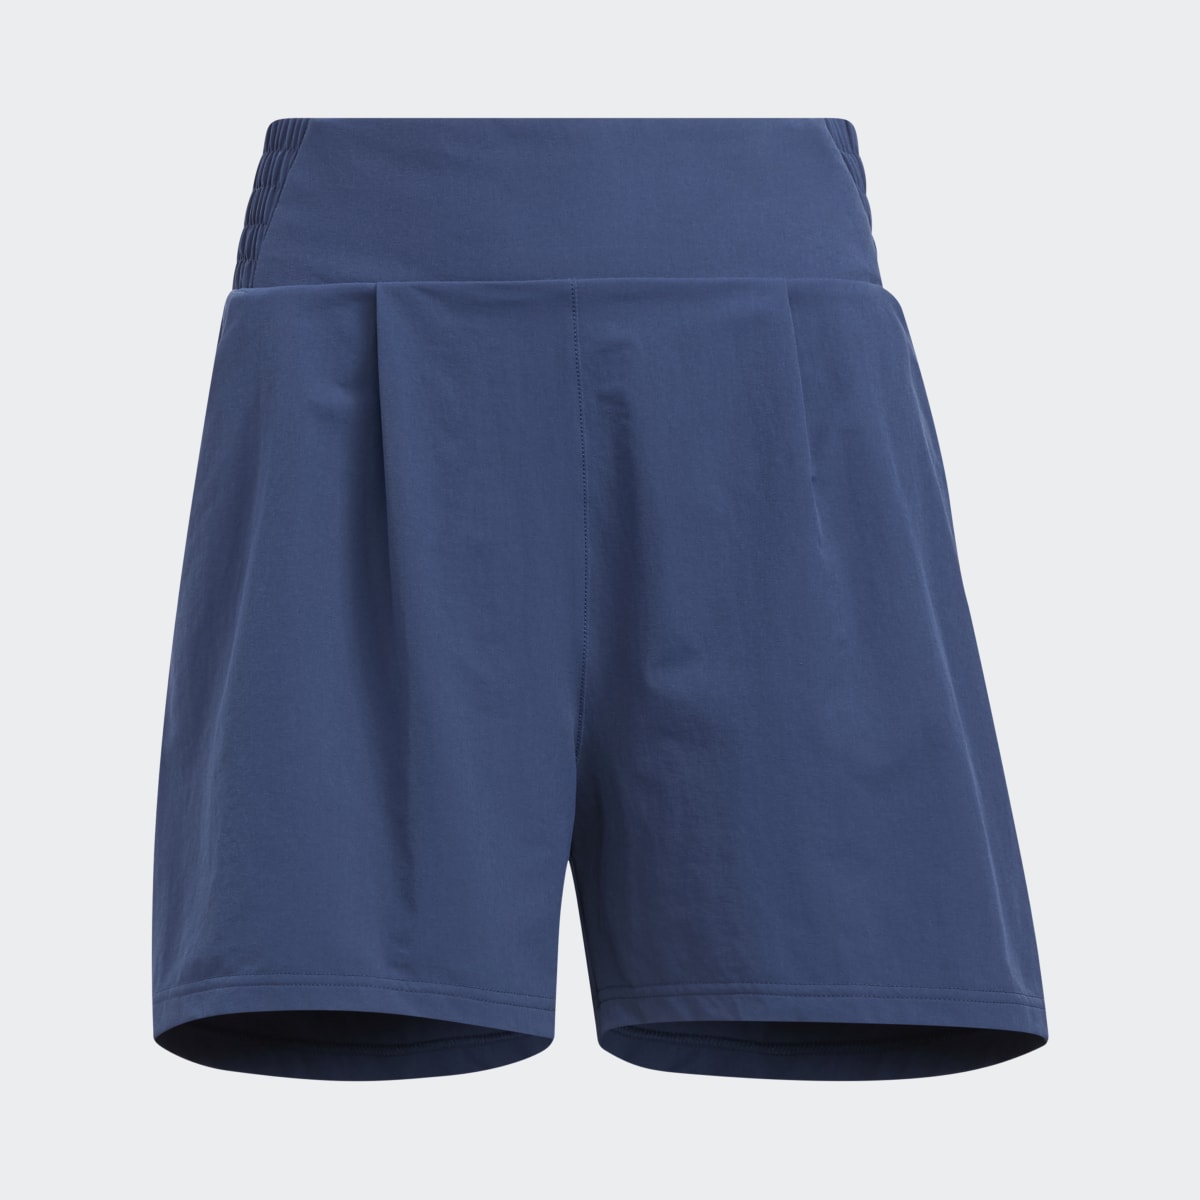 Adidas Go-To Pleated Golf Shorts. 5